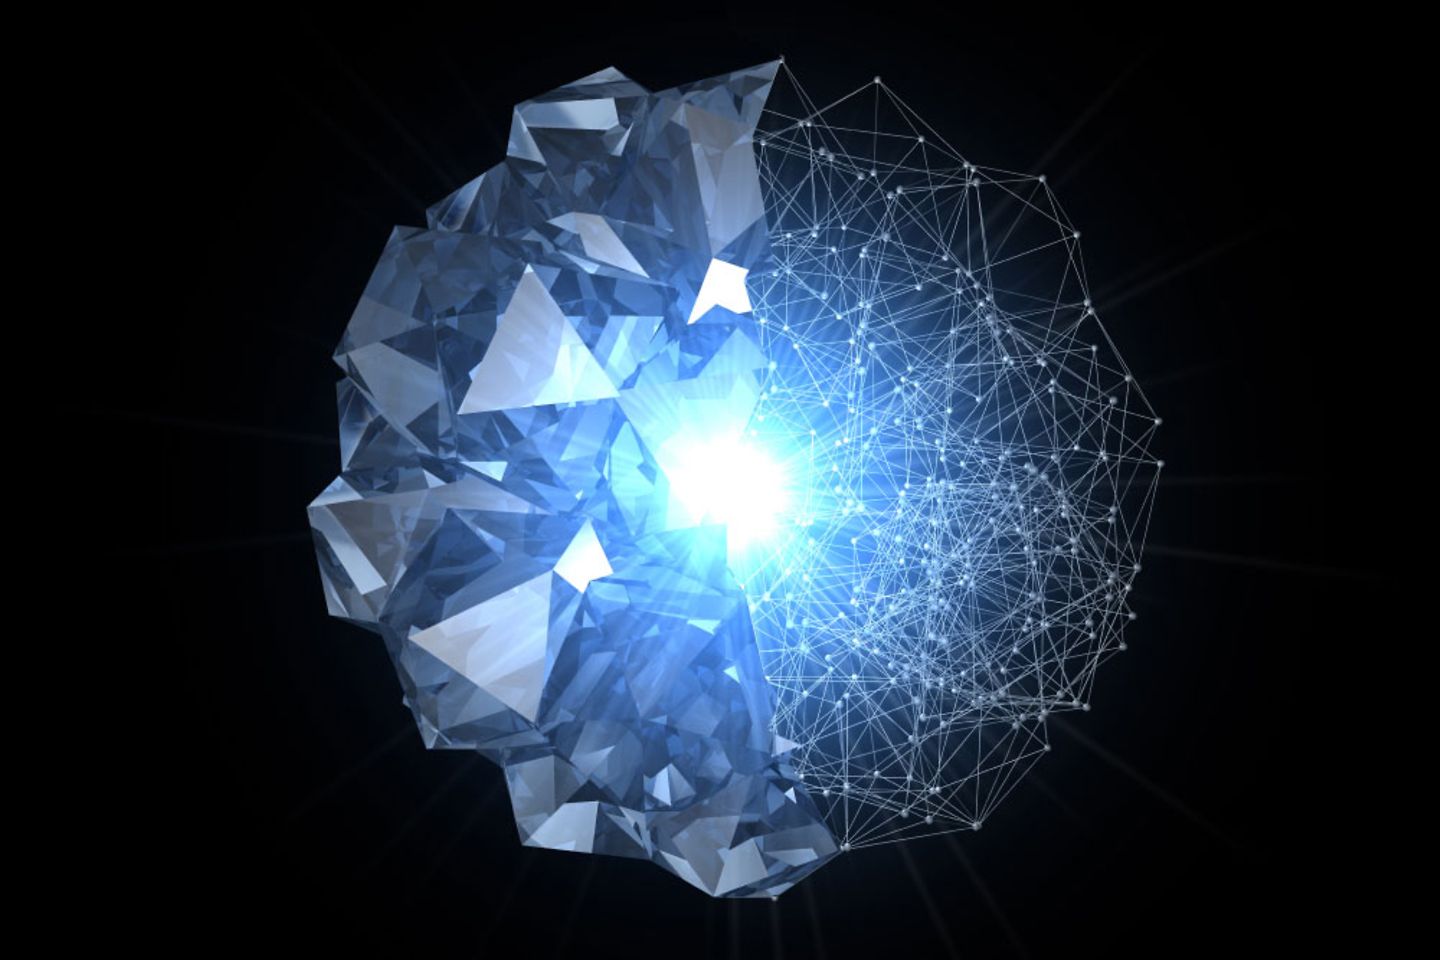 A diamond half represented as a mesh structure